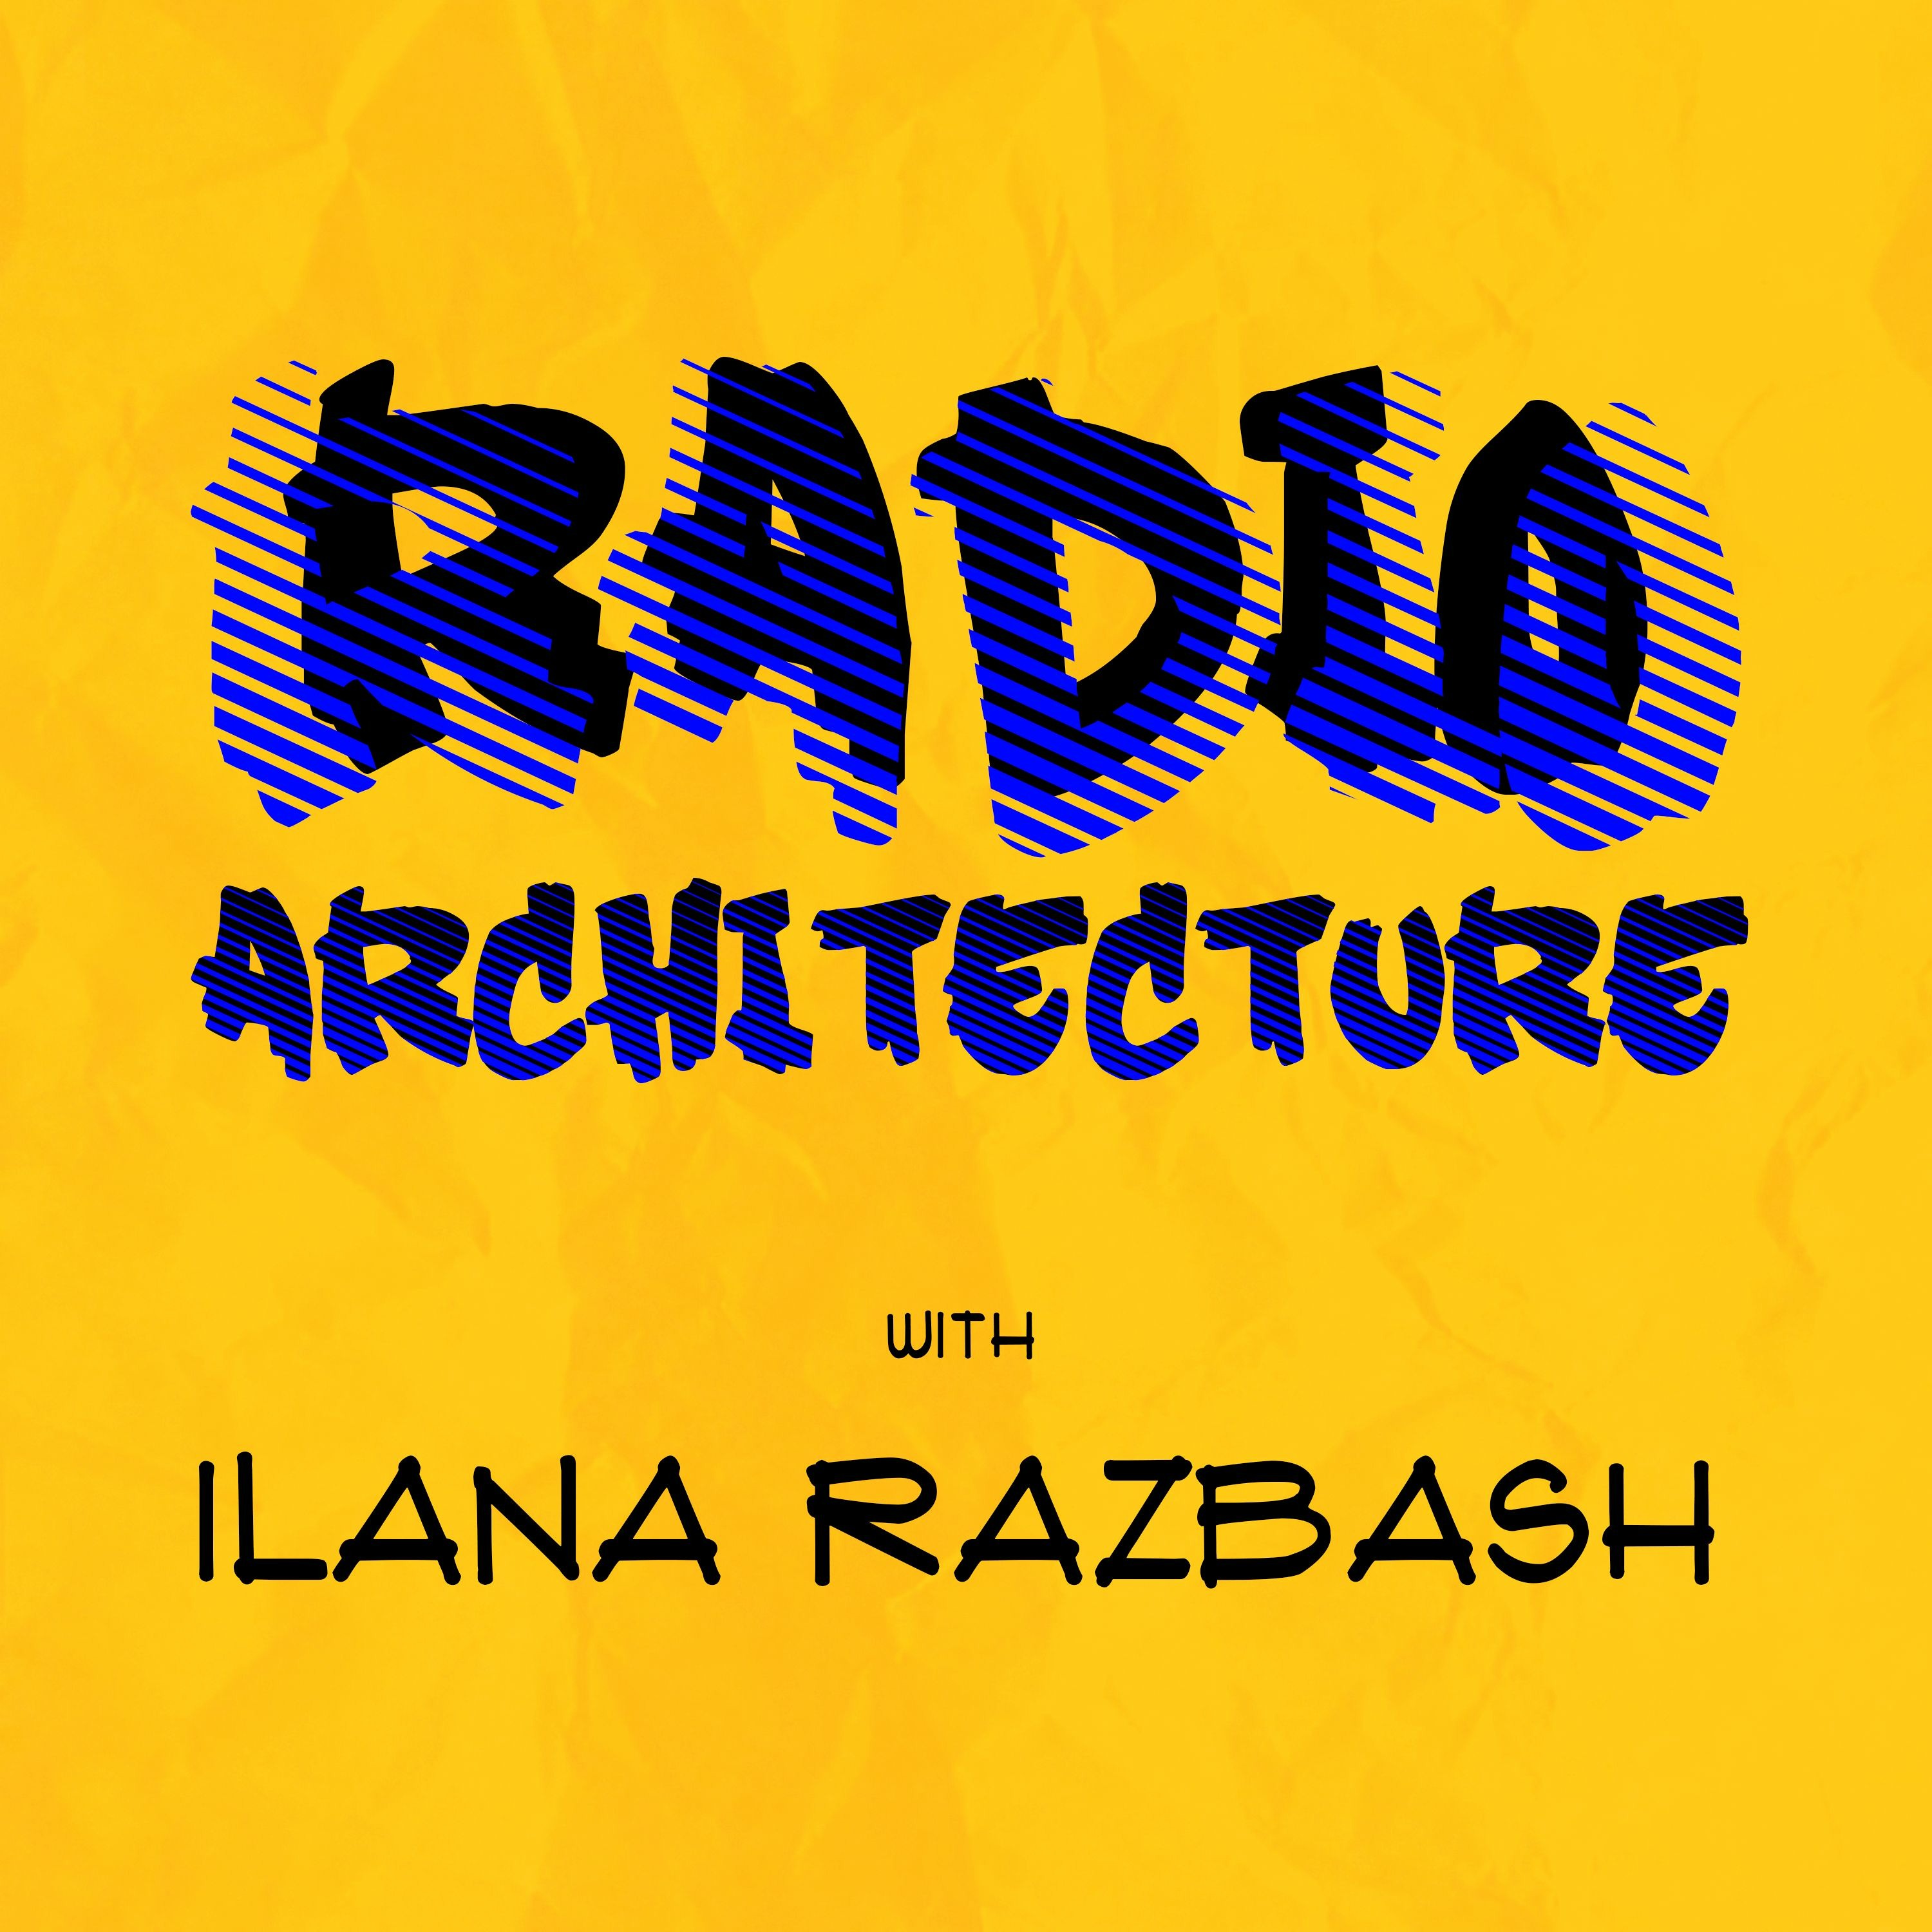 Radio Architecture With Ilana Razbash - Episode 41 (Bernard Cohen)